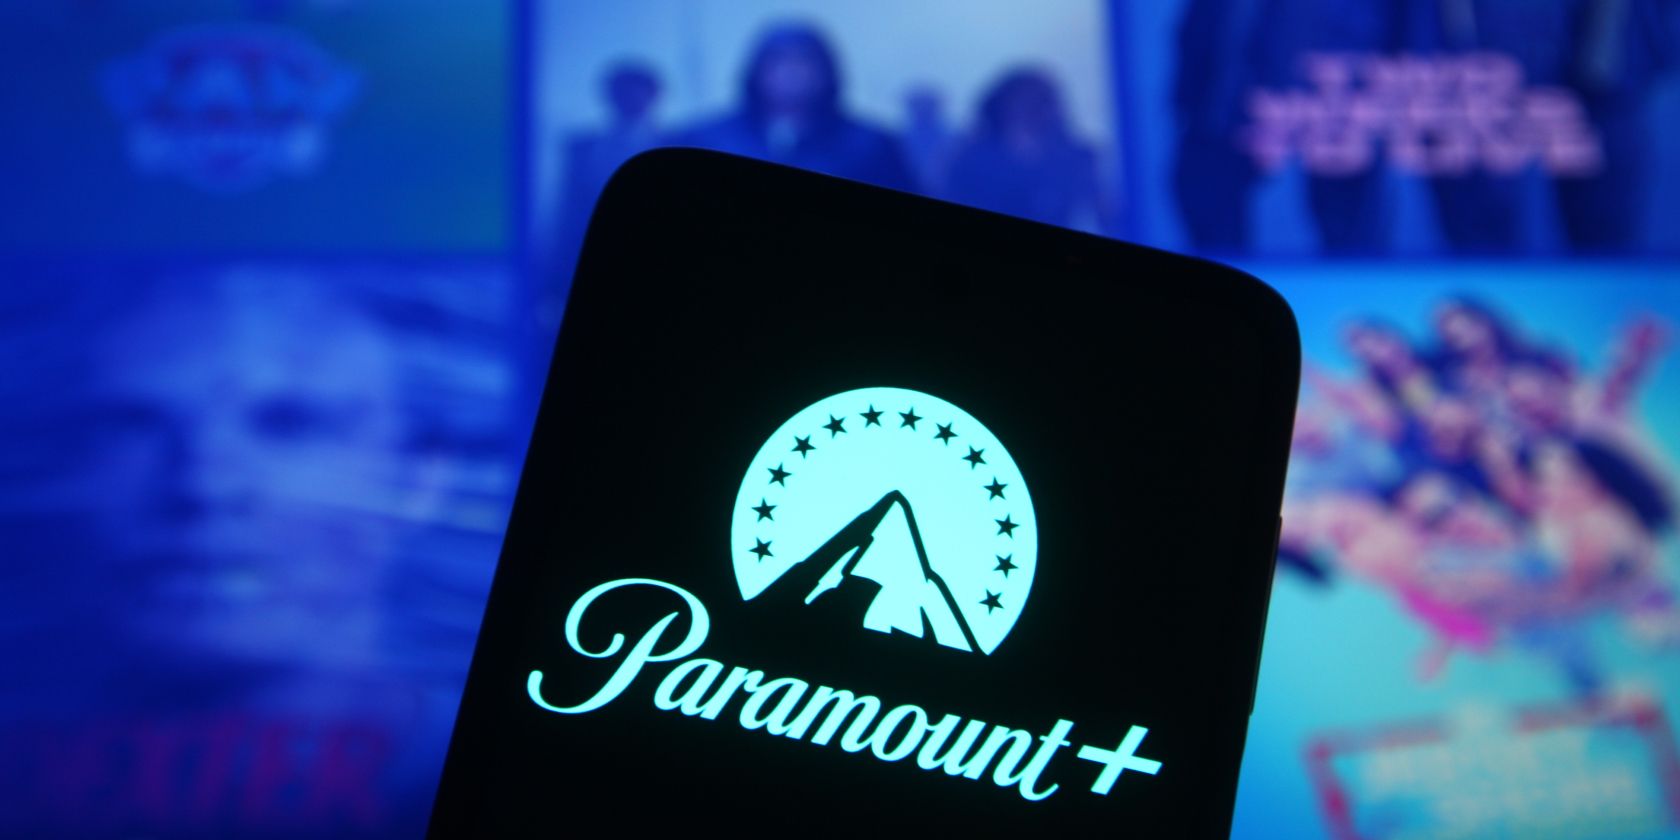 paramount+ logo on phone